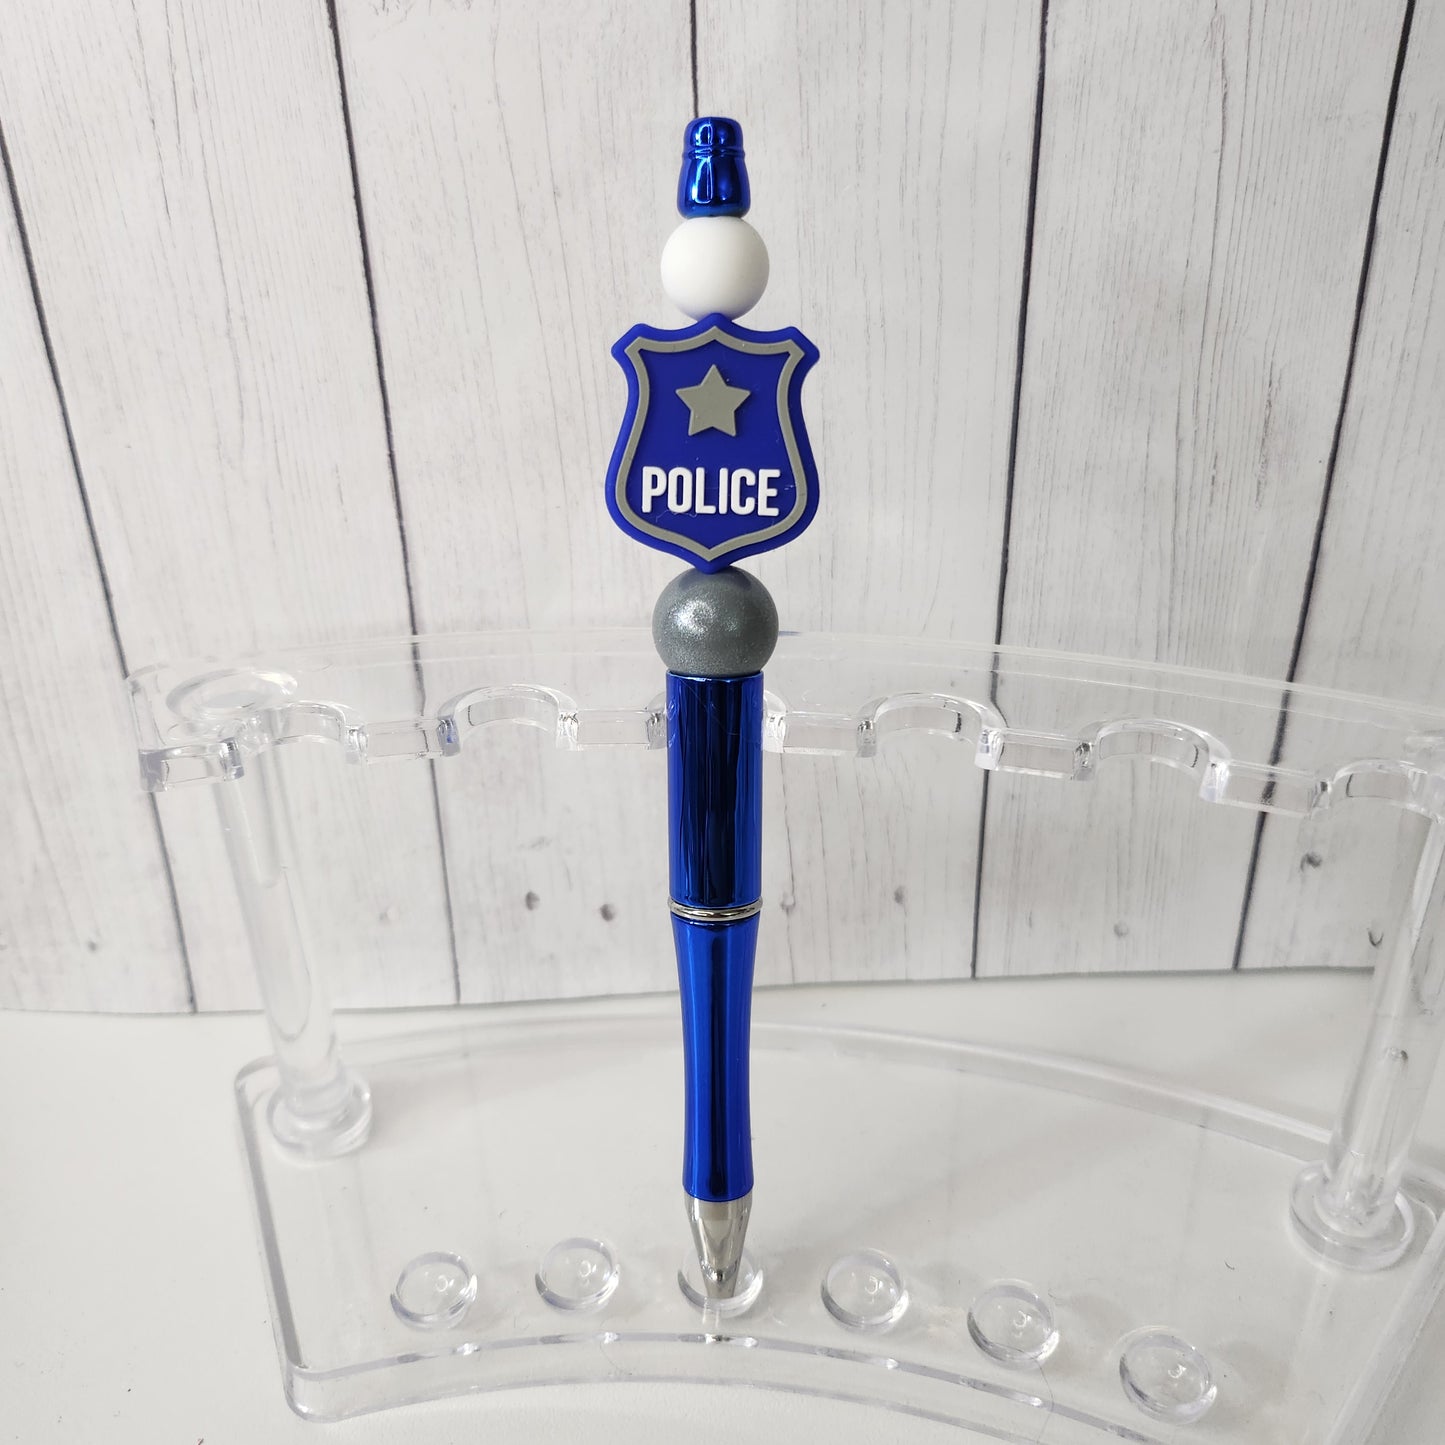 Police pen